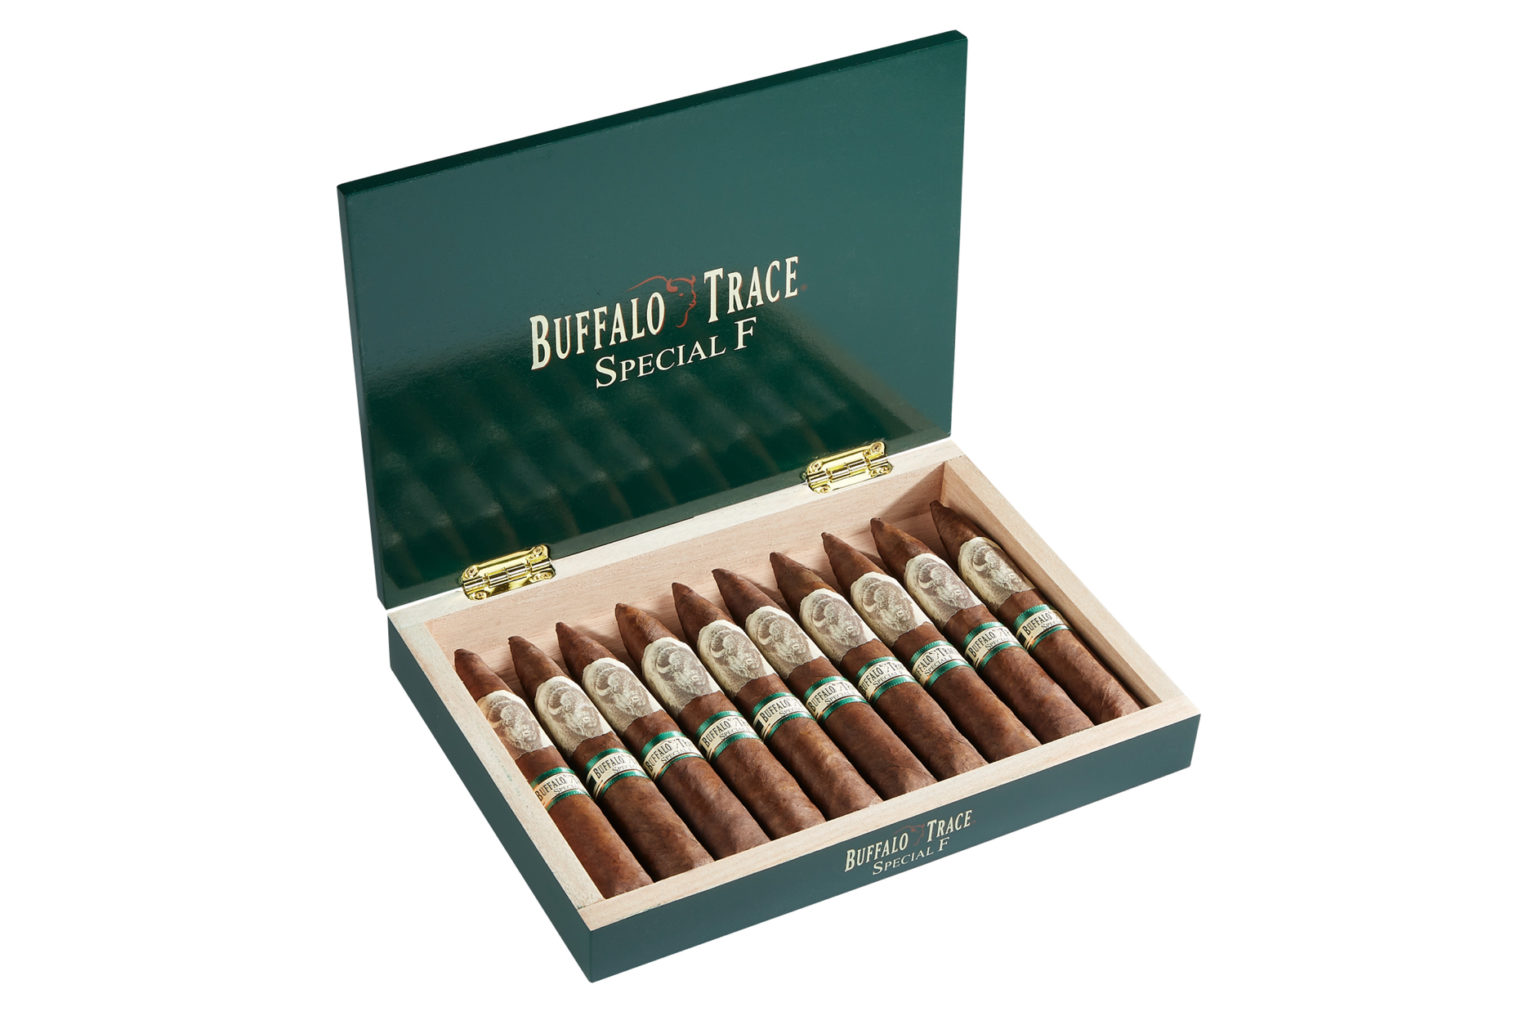 Buffalo Trace Special F Heading to Cigars International, Meier & Dutch